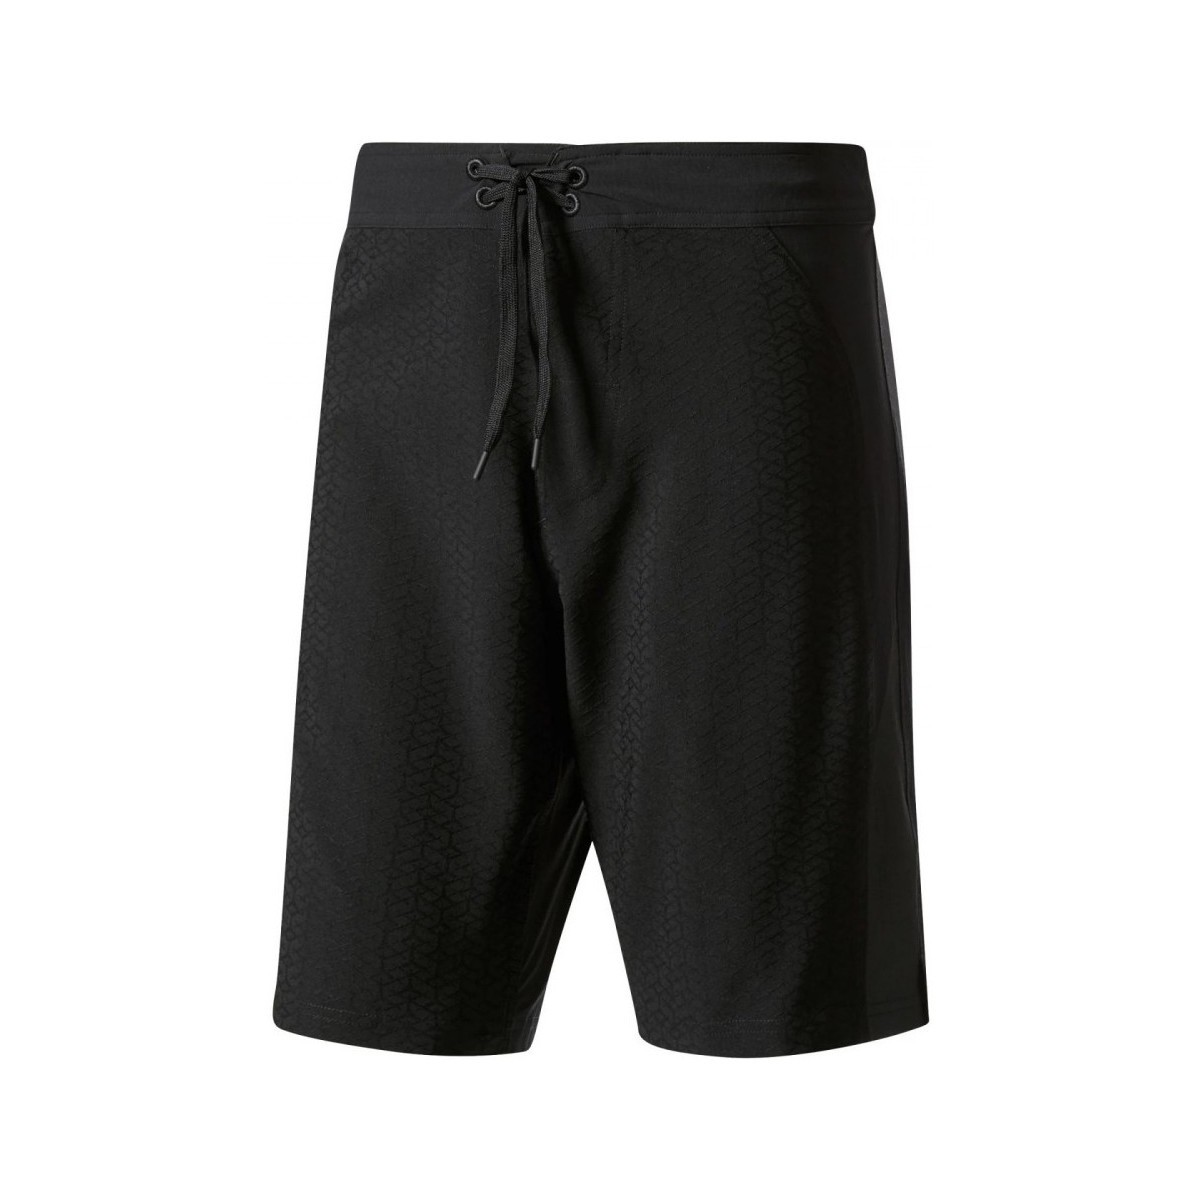 Vêtements Homme Shorts / Bermudas adidas Originals Crazytrain Ultra Strong Noir